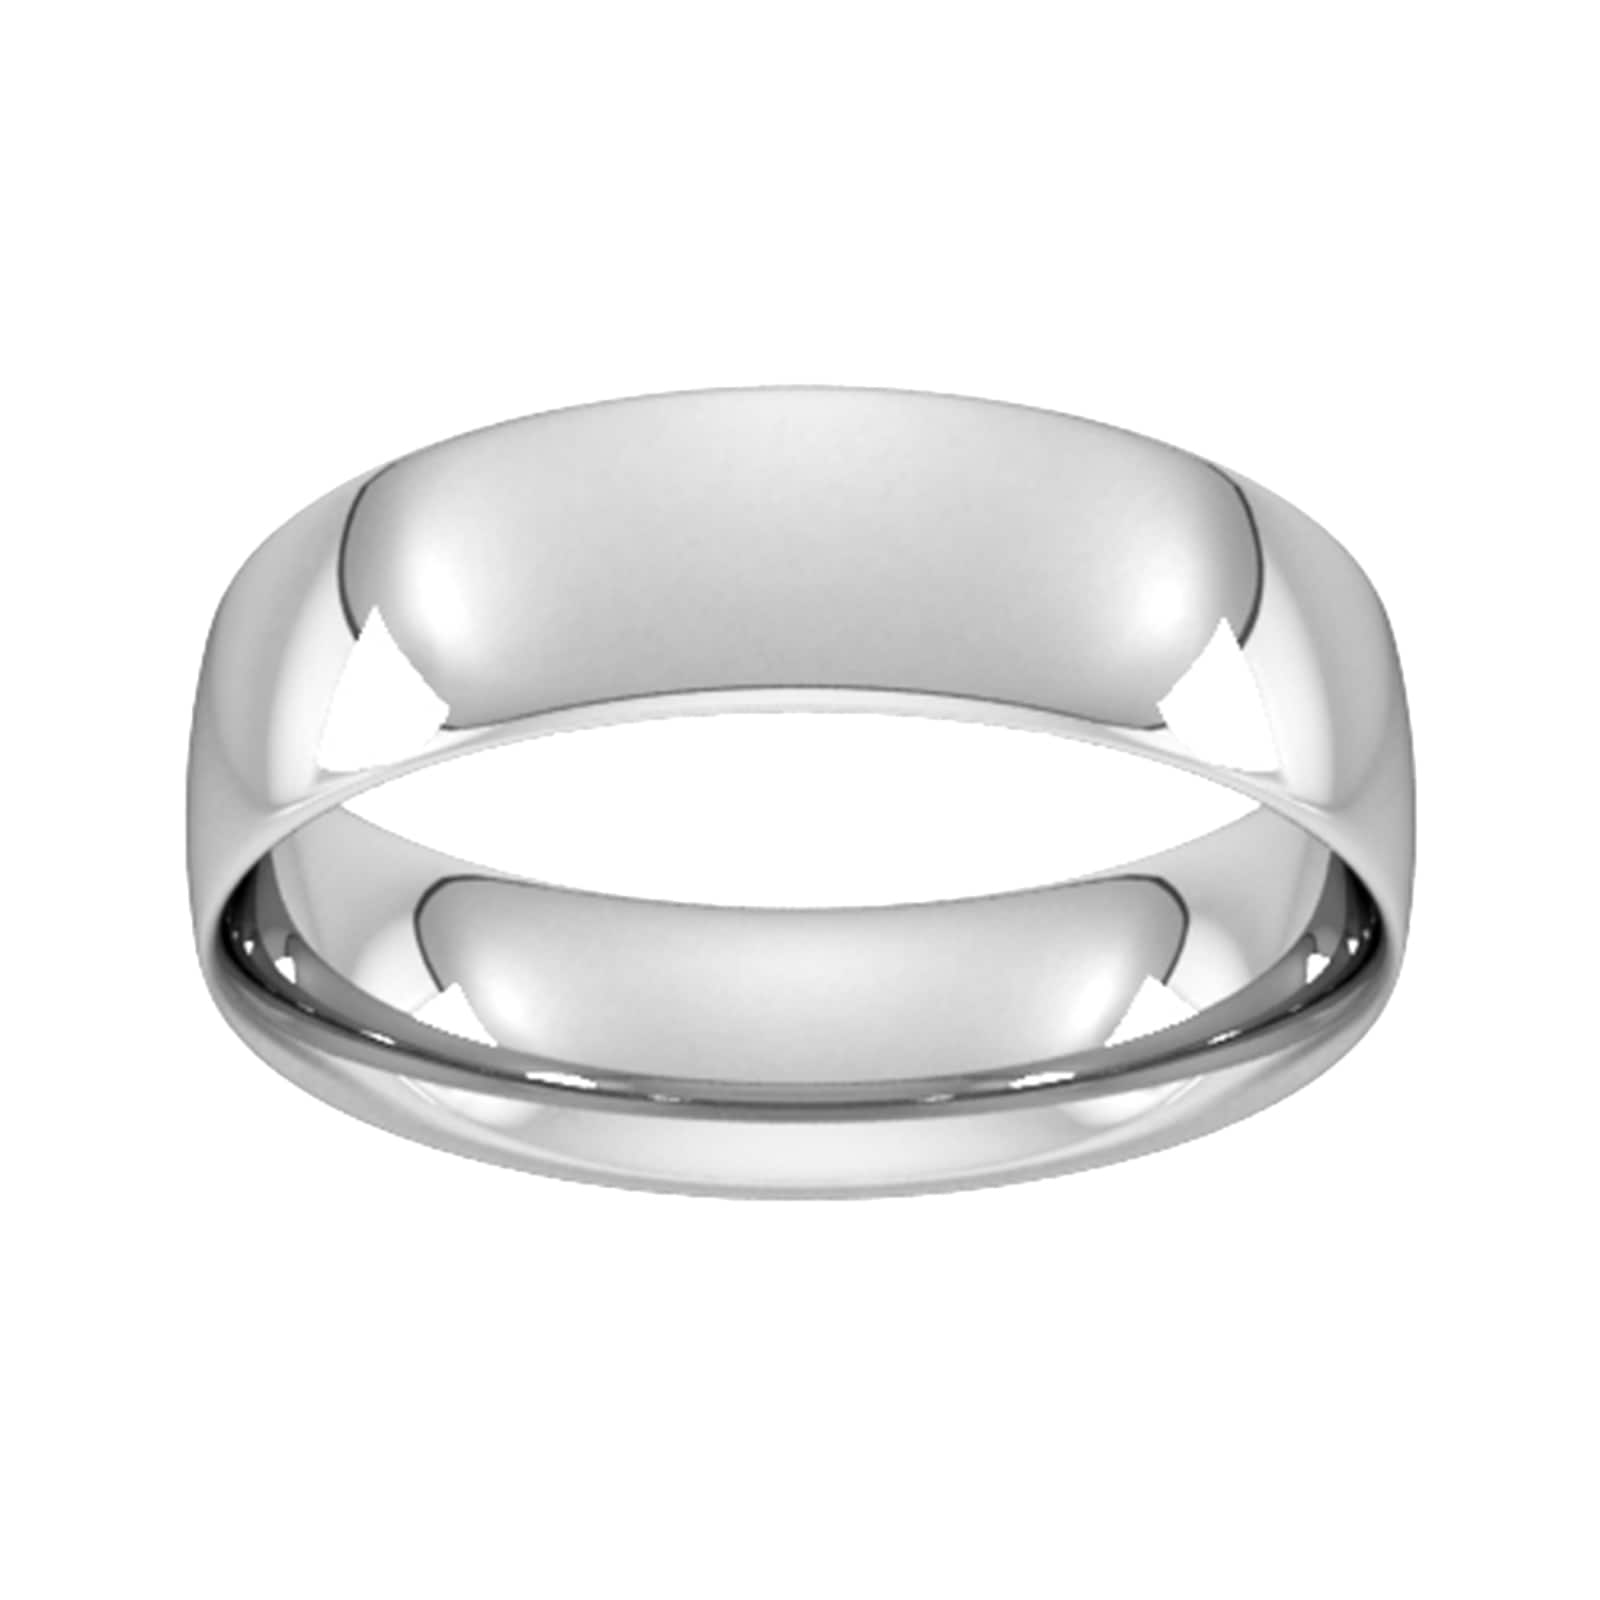 6mm Traditional Court Standard Wedding Ring In 950 Palladium - Ring Size Q